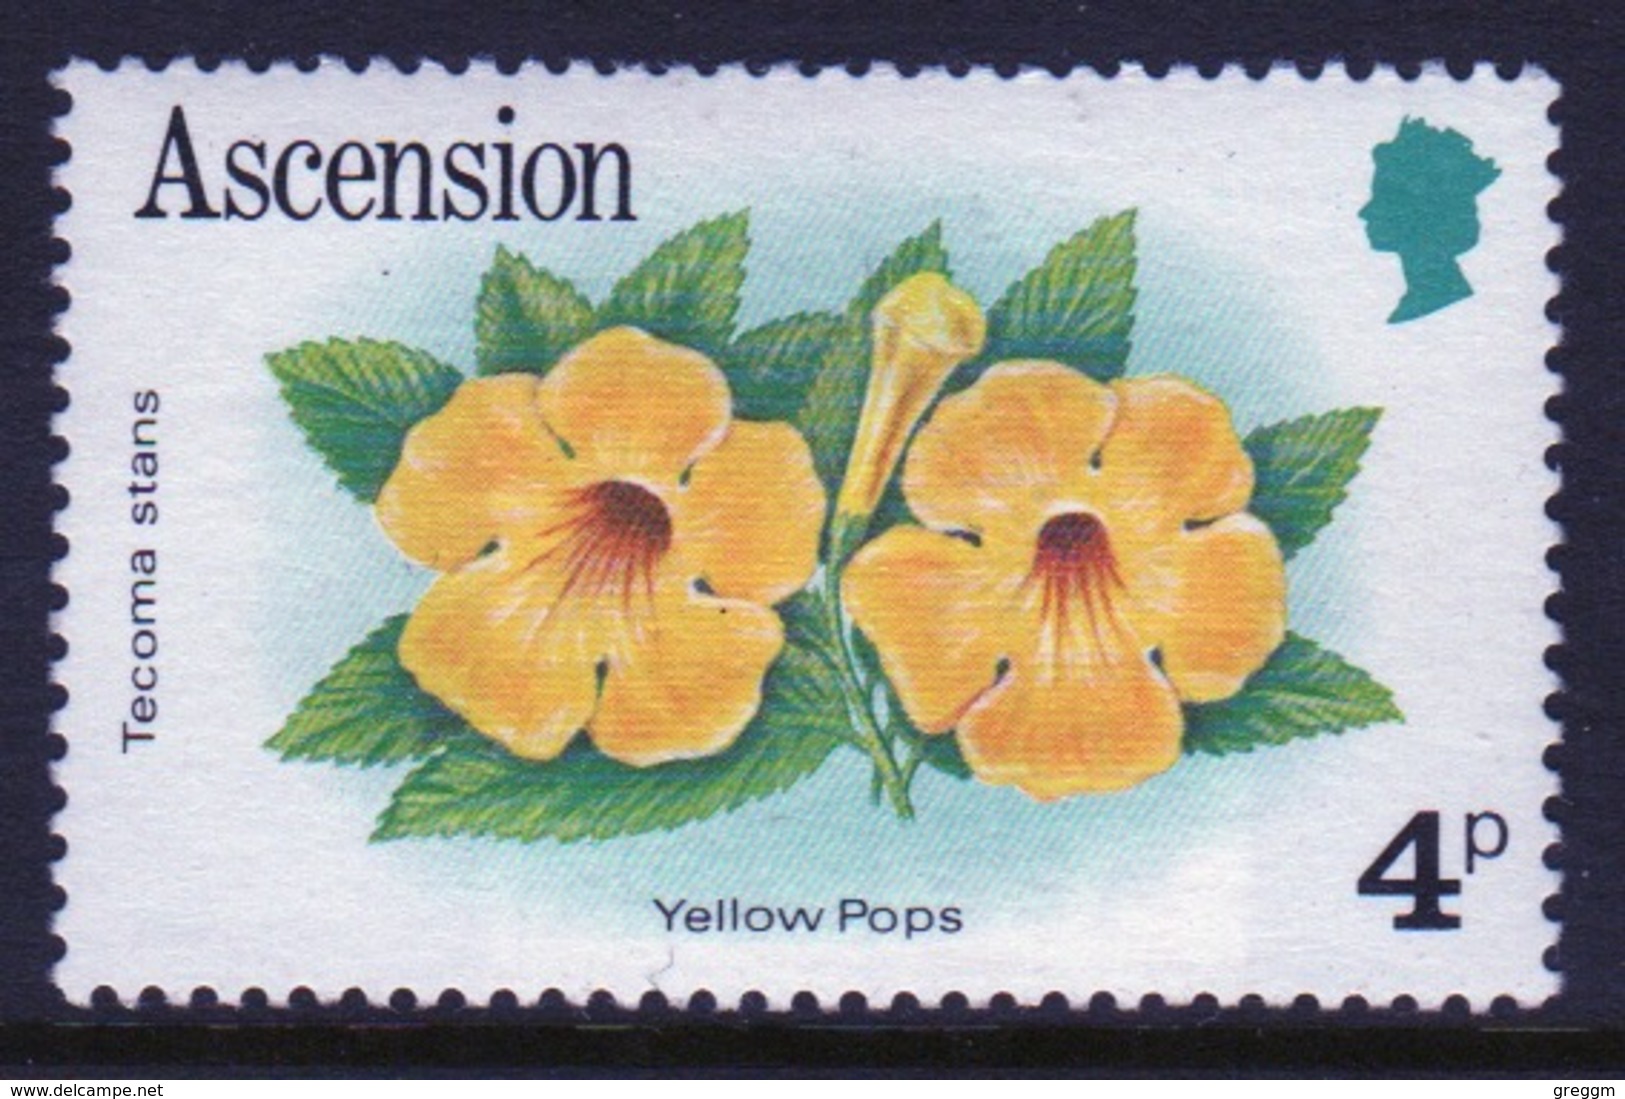 Ascension Queen Elizabeth Unmounted Mint 4p Stamp From 1981 Set On Flowers. - Ascension (Ile De L')